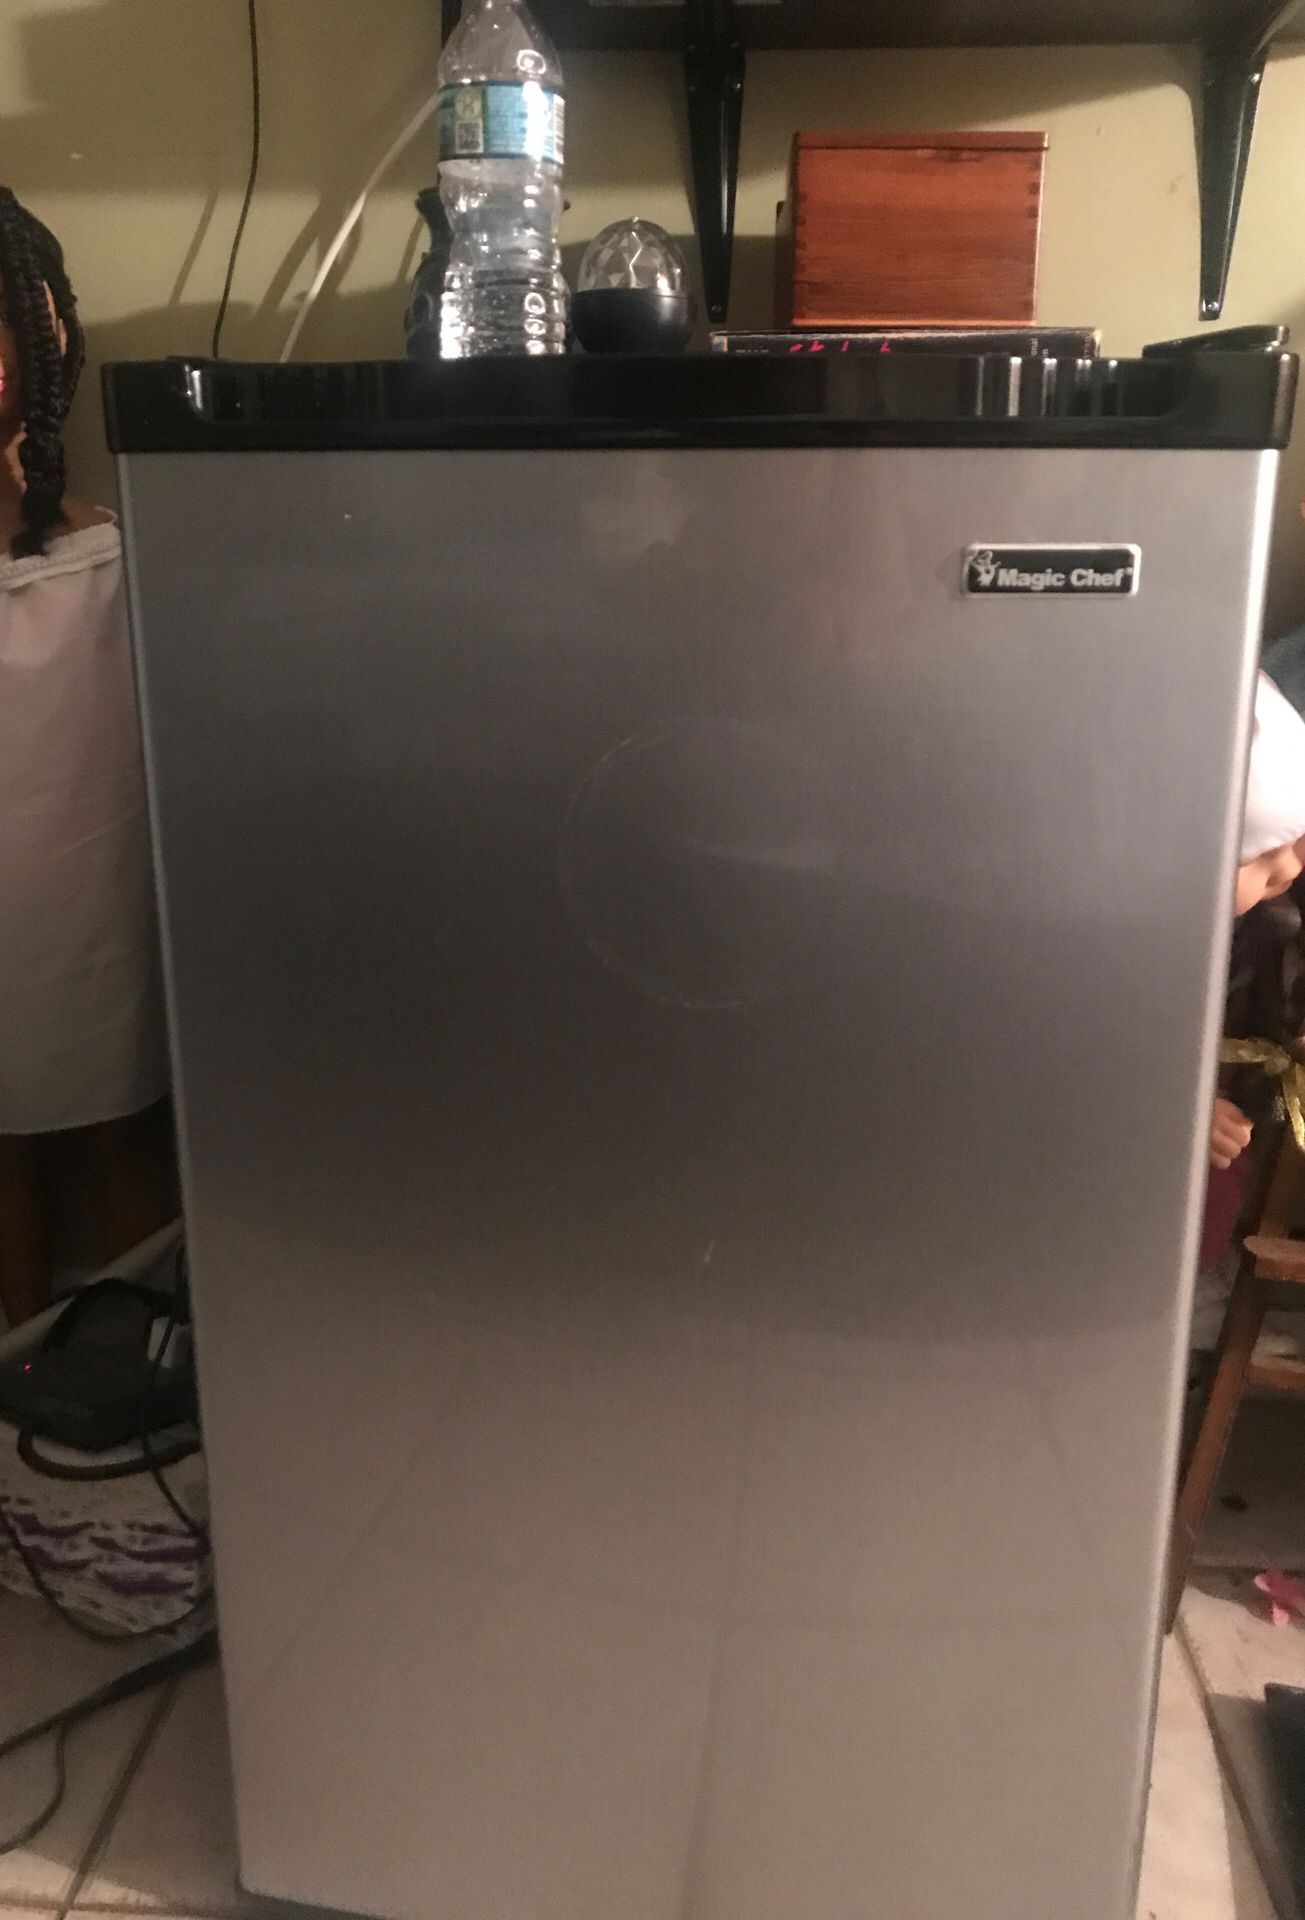 Magic chef refrigerator and freezer